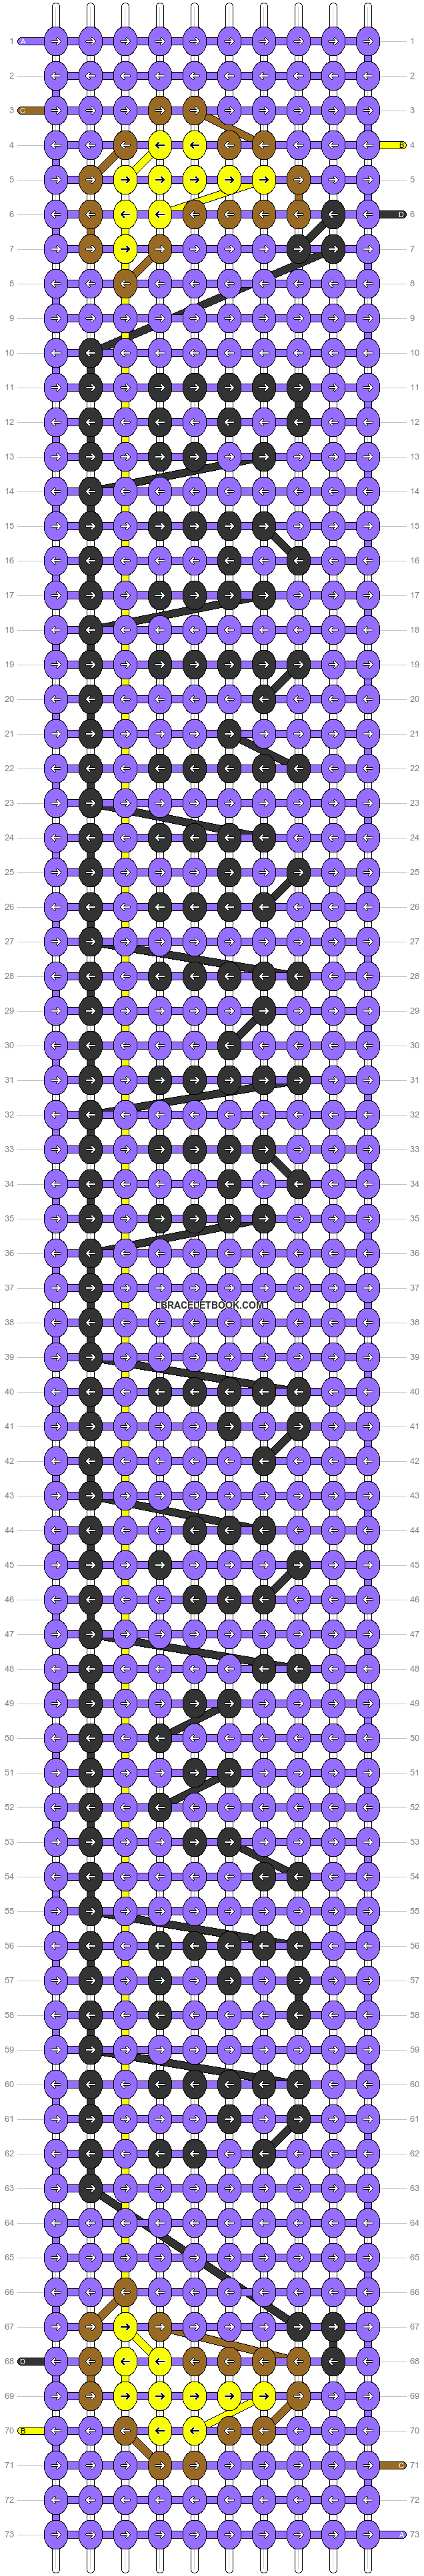 Alpha pattern #42890 variation #59650 pattern